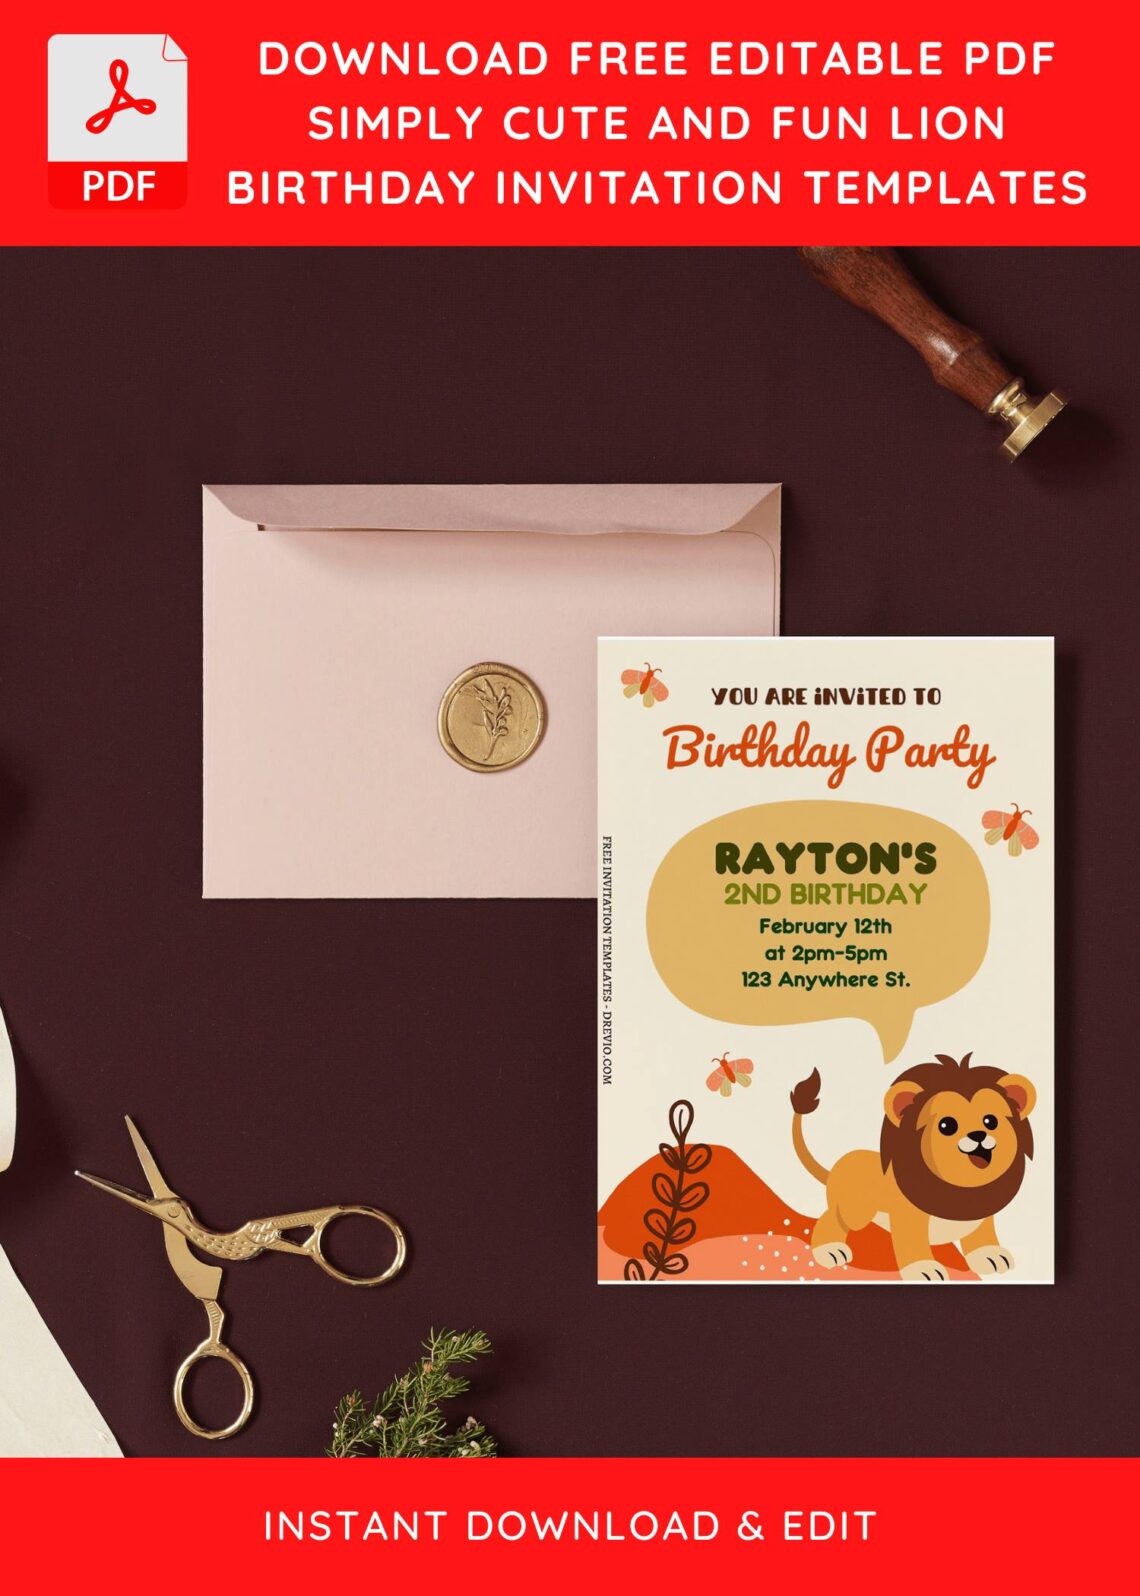 (Free Editable PDF) Roaring Lion Birthday Invitation Templates I